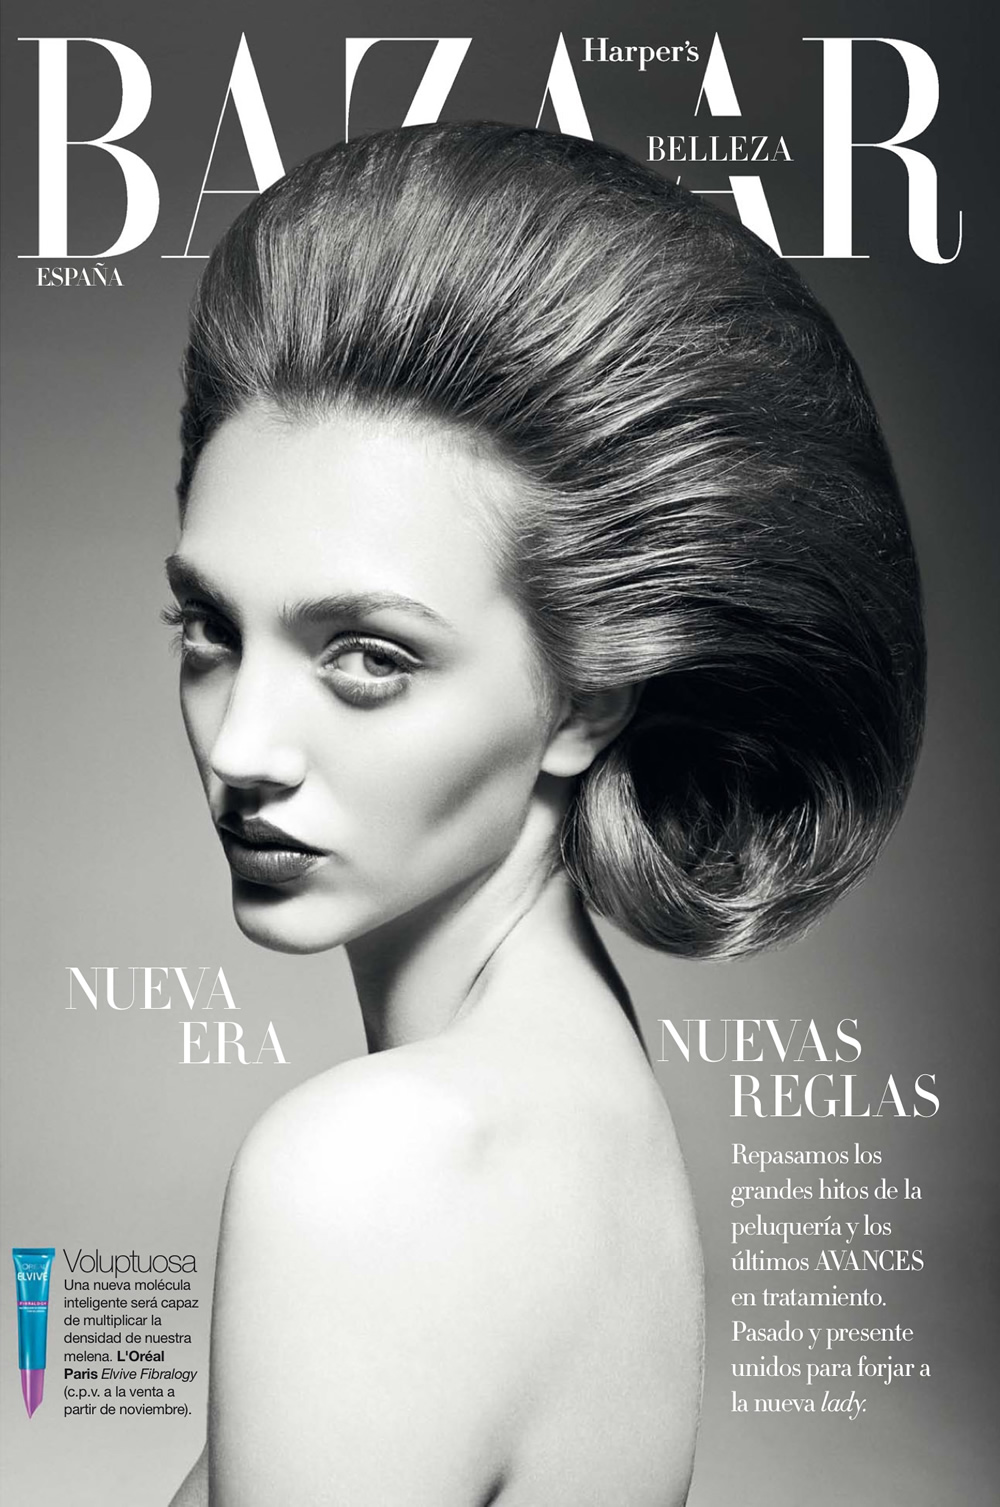 Neus Bermejo by Xevi Muntané for Harper’s Bazaar Spain October 2013 (1)